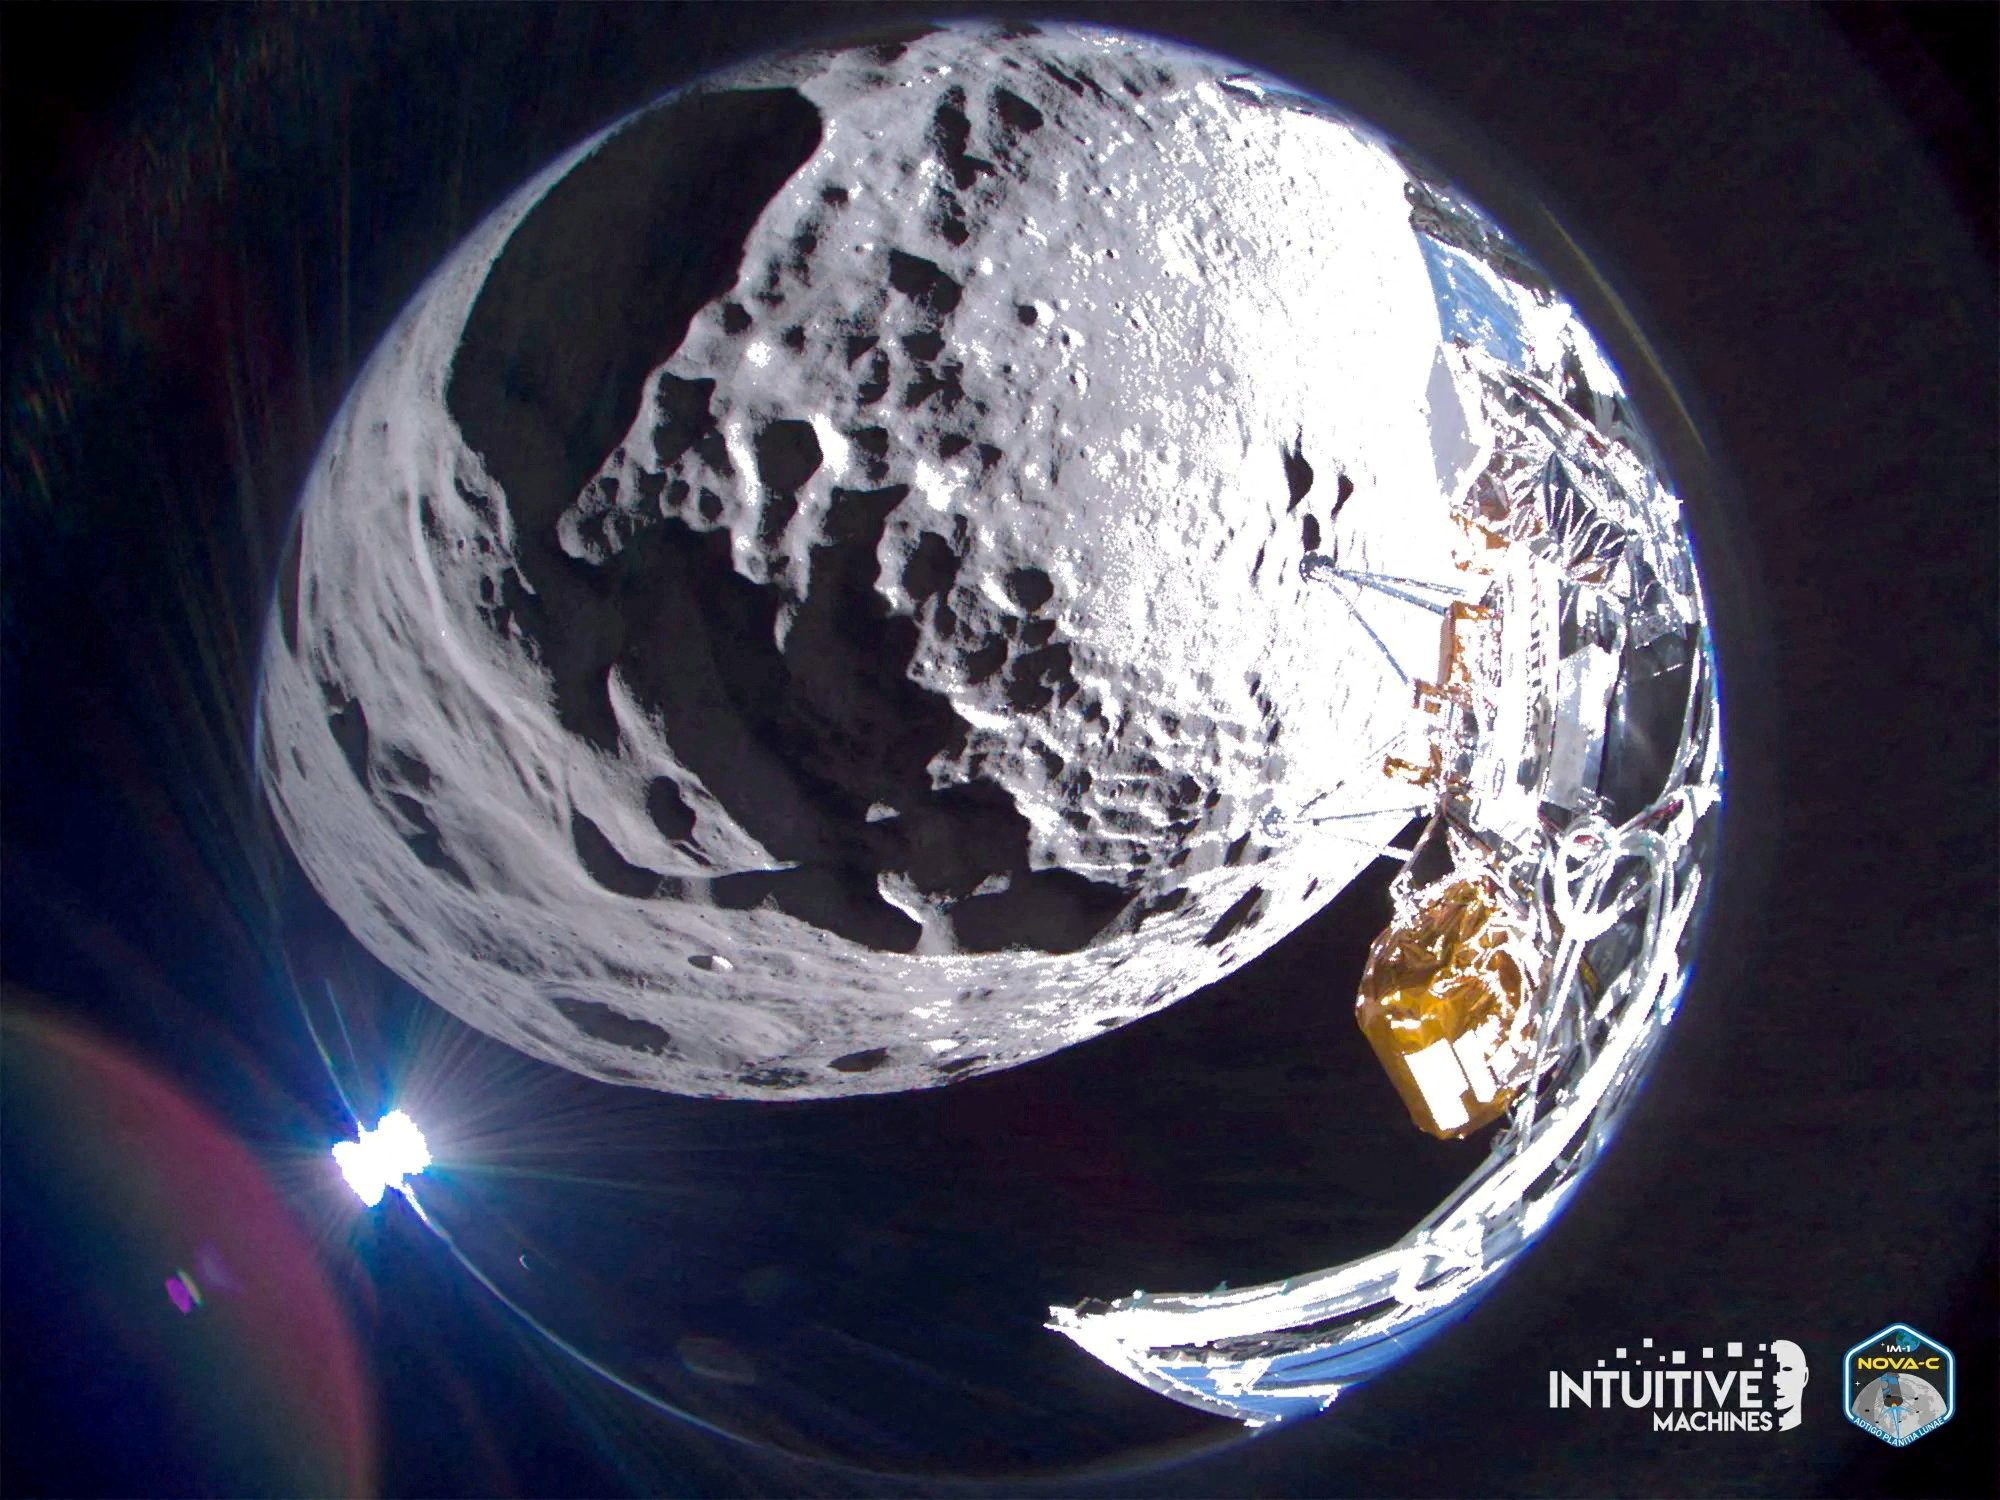 Odysseus moon lander still operational, in final hours before battery dies